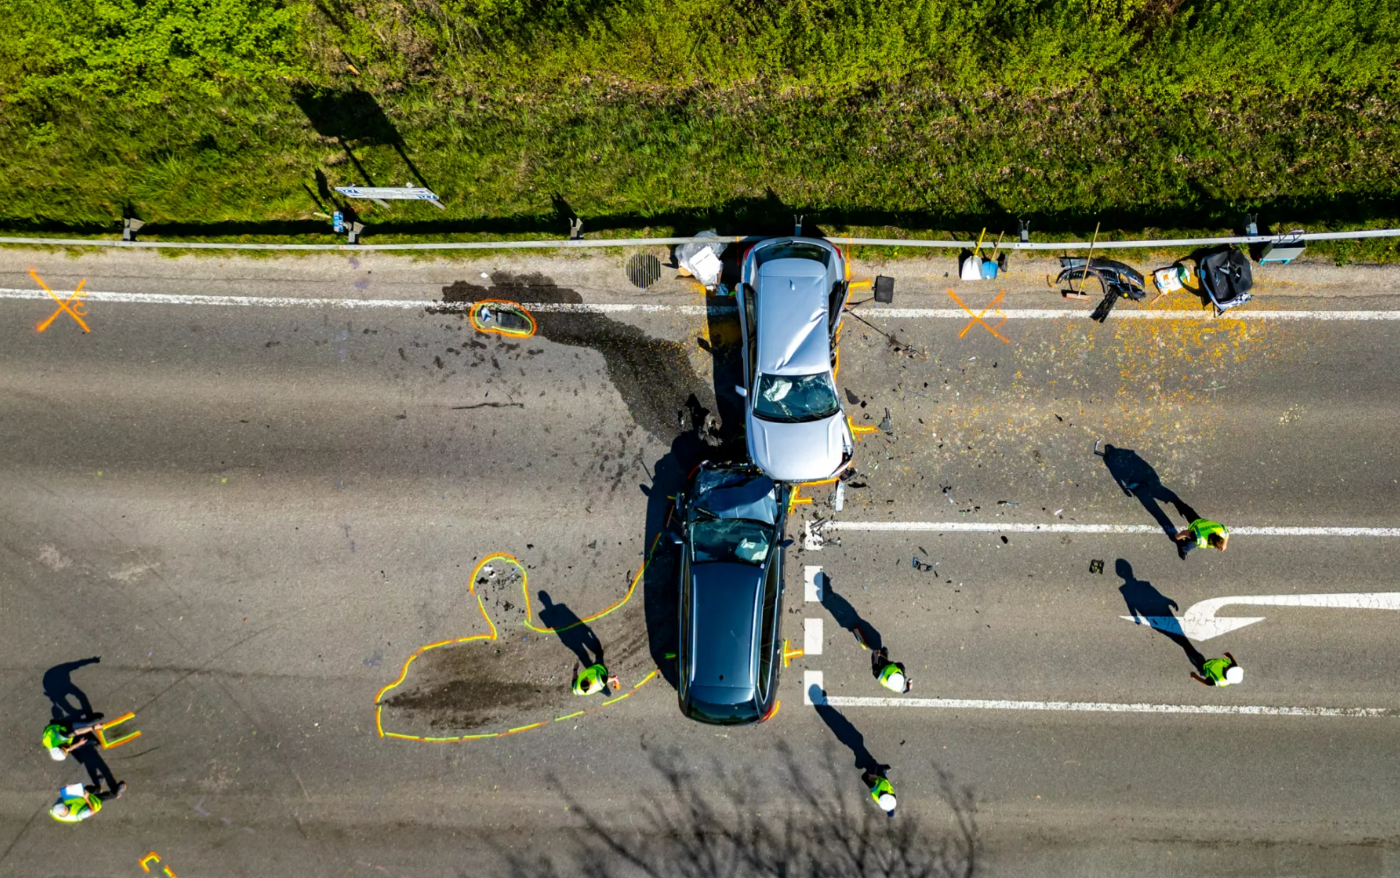 The accident happened at a junction. (Bild: © TEAM FOTOKERSCHI.AT / MARTIN SCHARINGER)